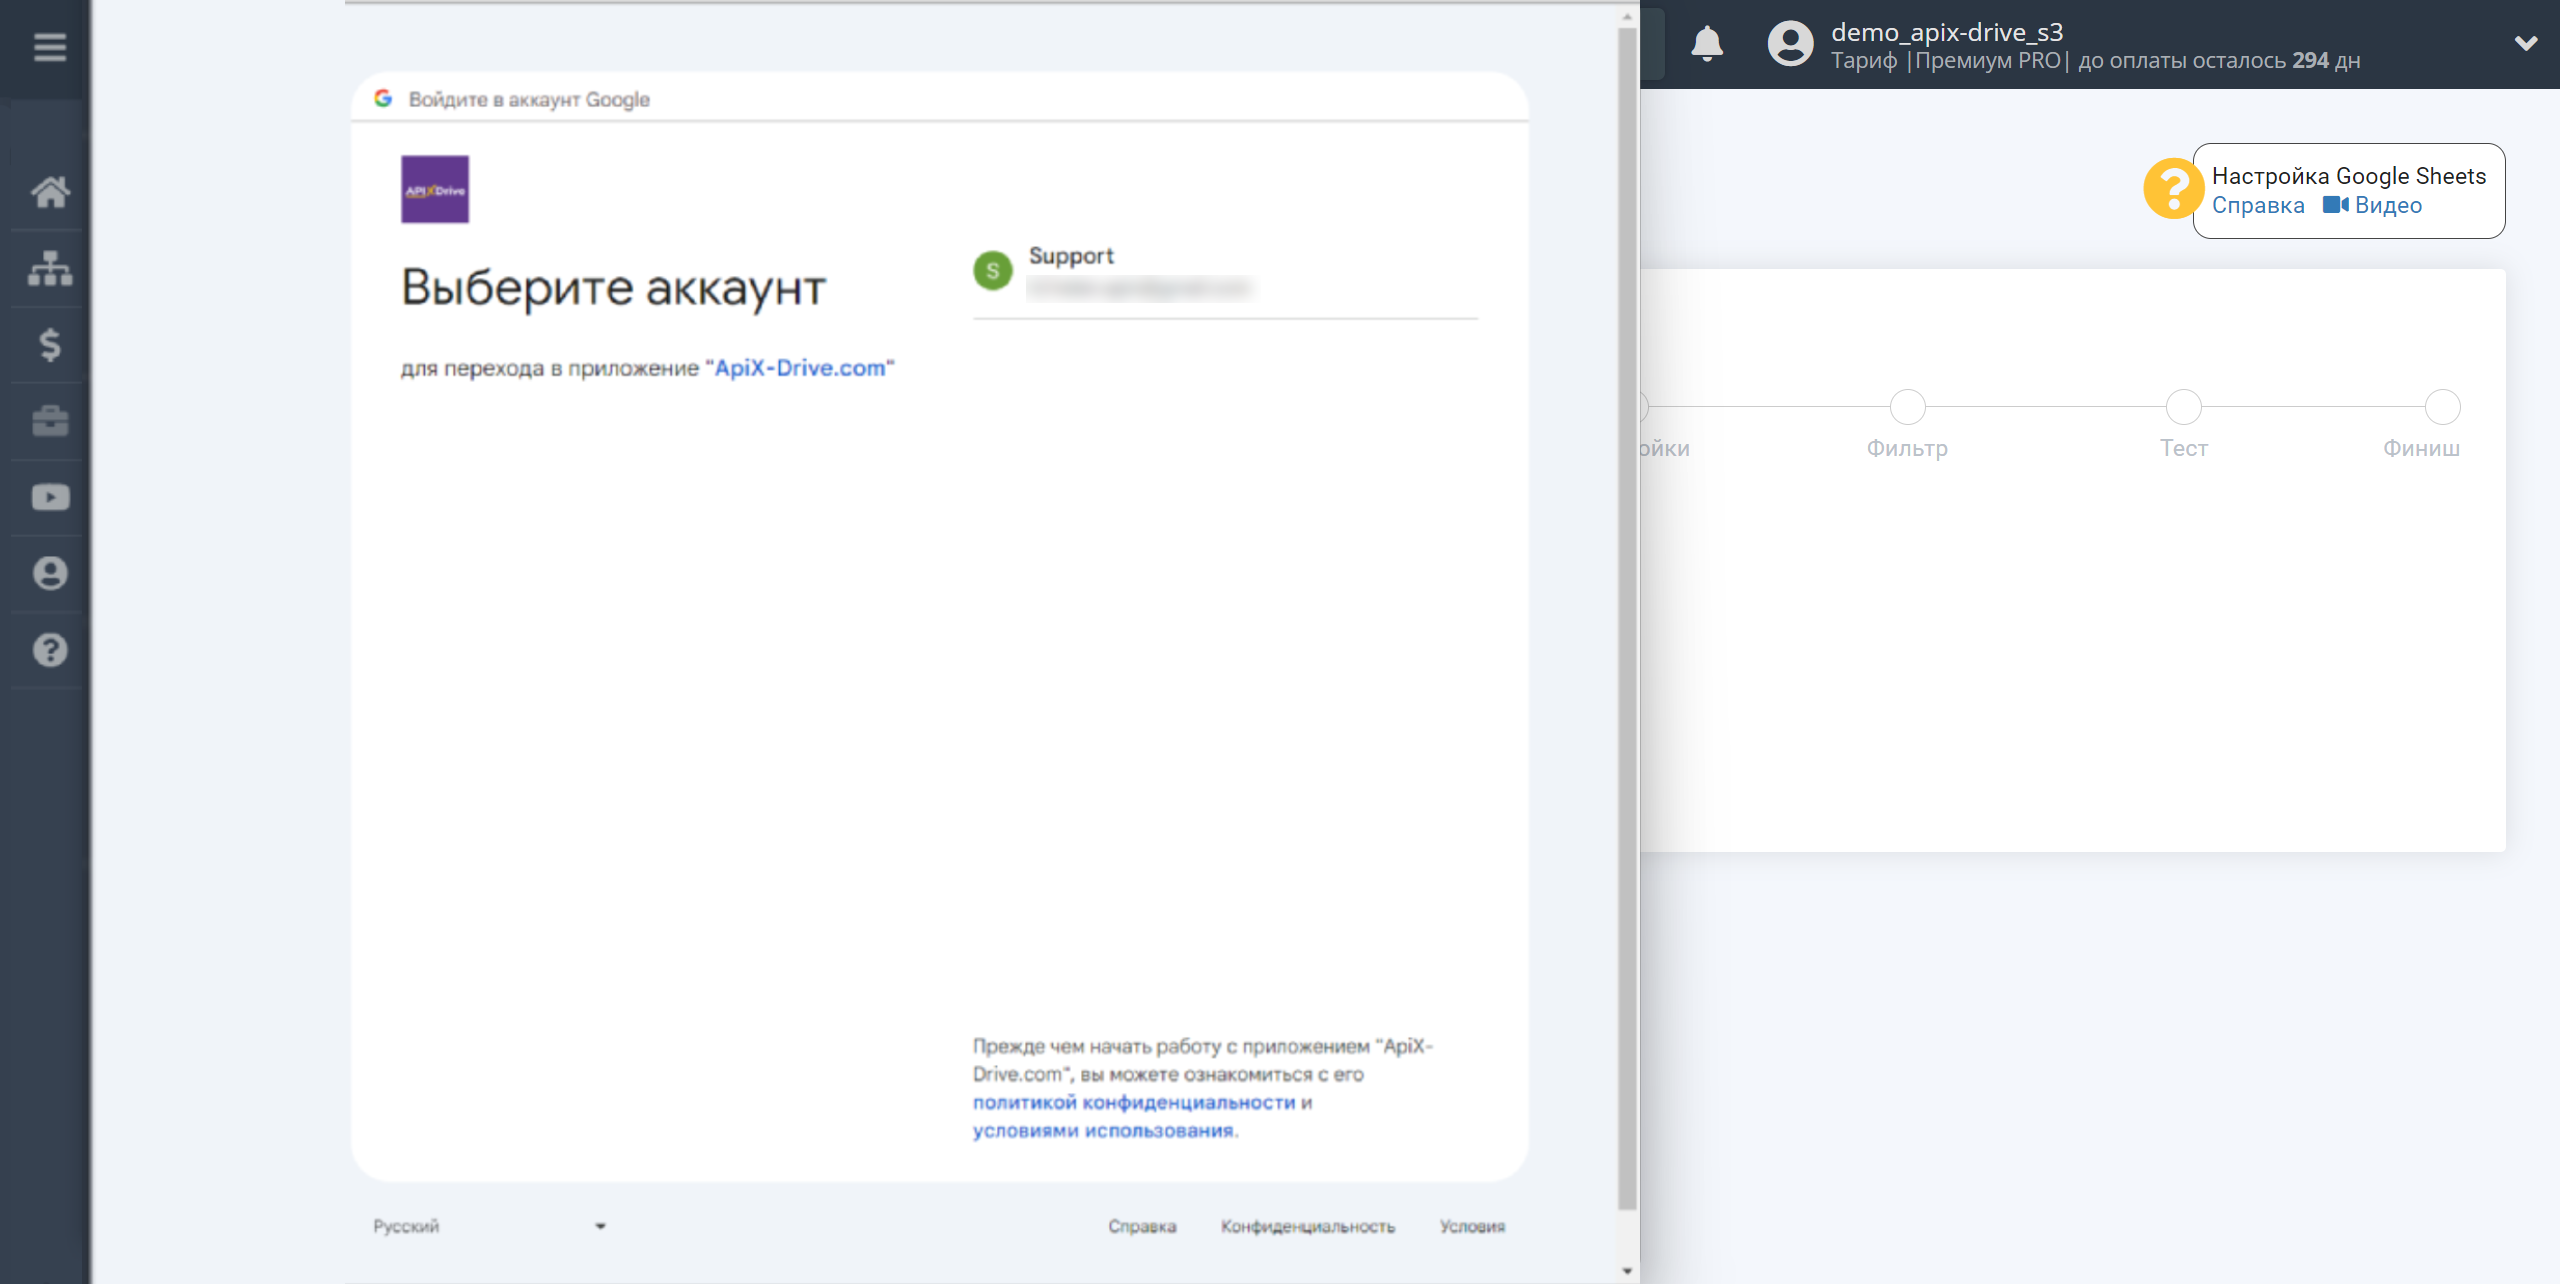 Настройка Поиска Контакта Sendlane в Google Sheets | Подключение аккаунта Источника